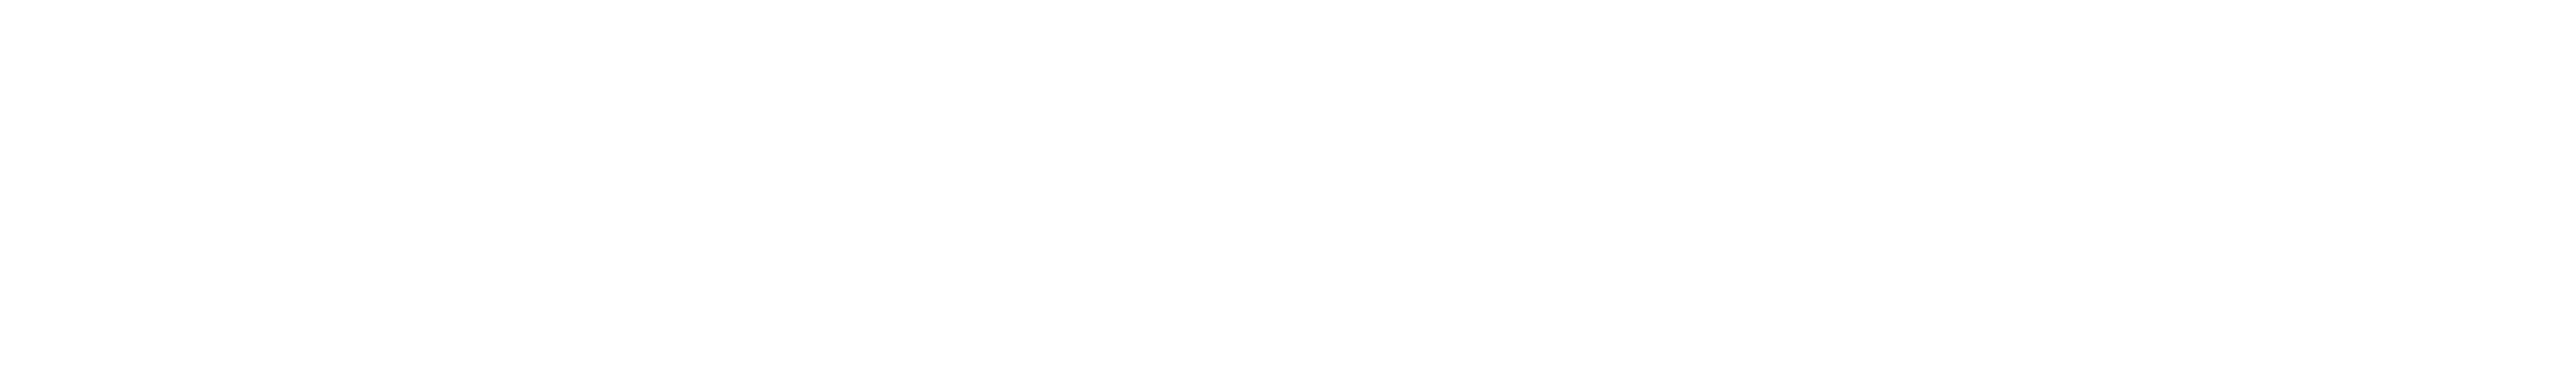 Independent_Analytic_logo_white